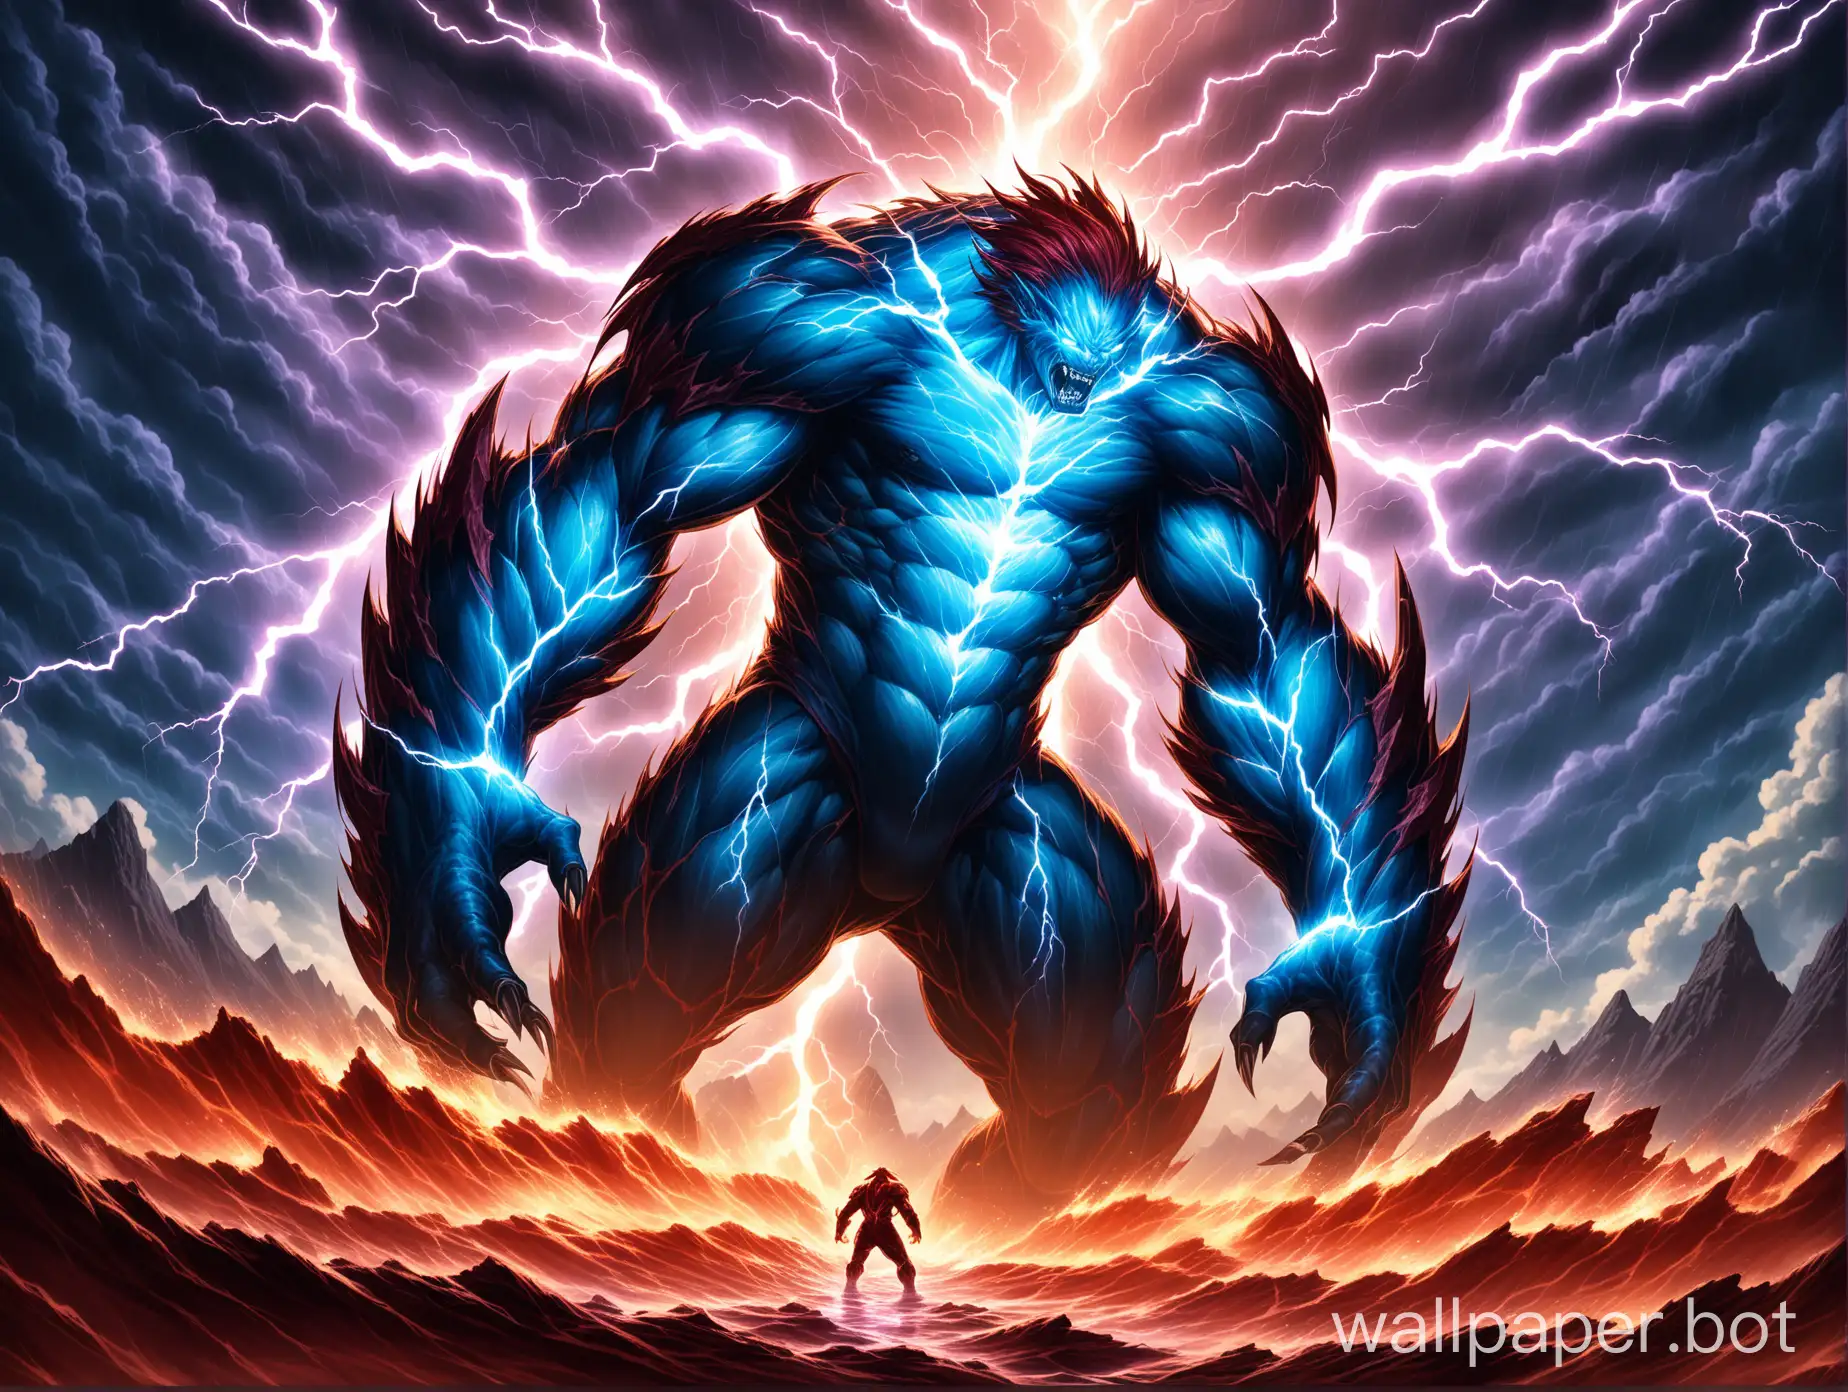 Epic-Clash-Lightning-Creature-Amidst-Legendary-Giants